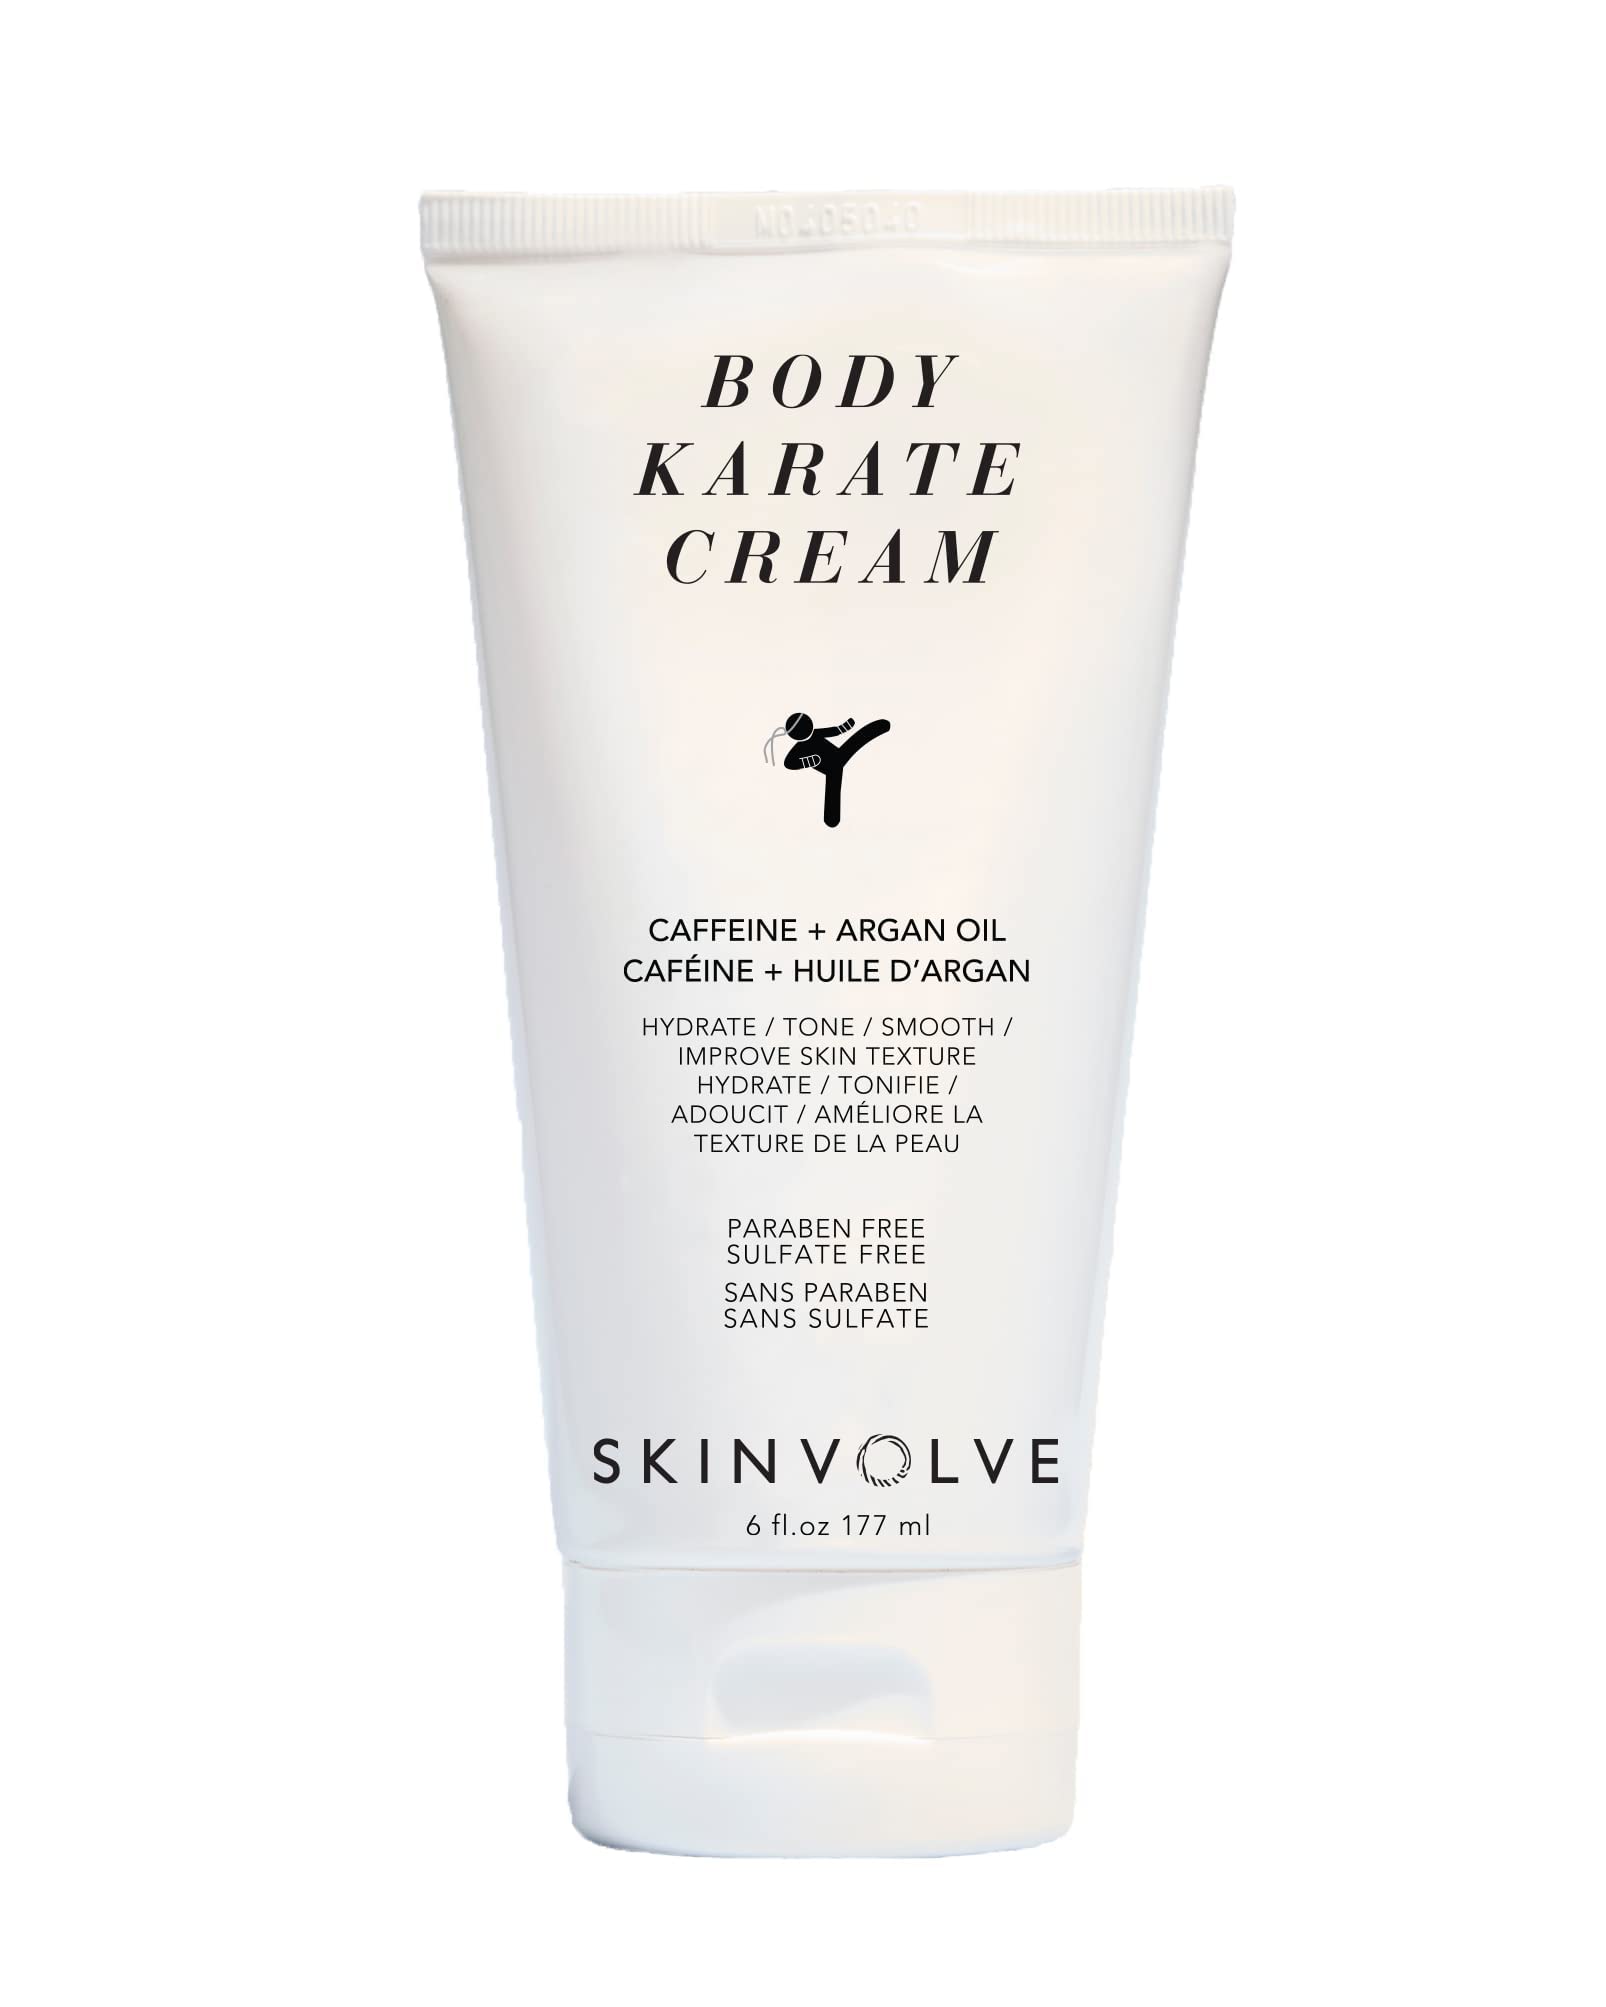 SKINVOLVE Body Karate Cream with Caffeine and Argan Oil - Hydrating, Tightening, Sculpting Anti-Aging Body Moisturizer - Improves Skin Texture - 6oz